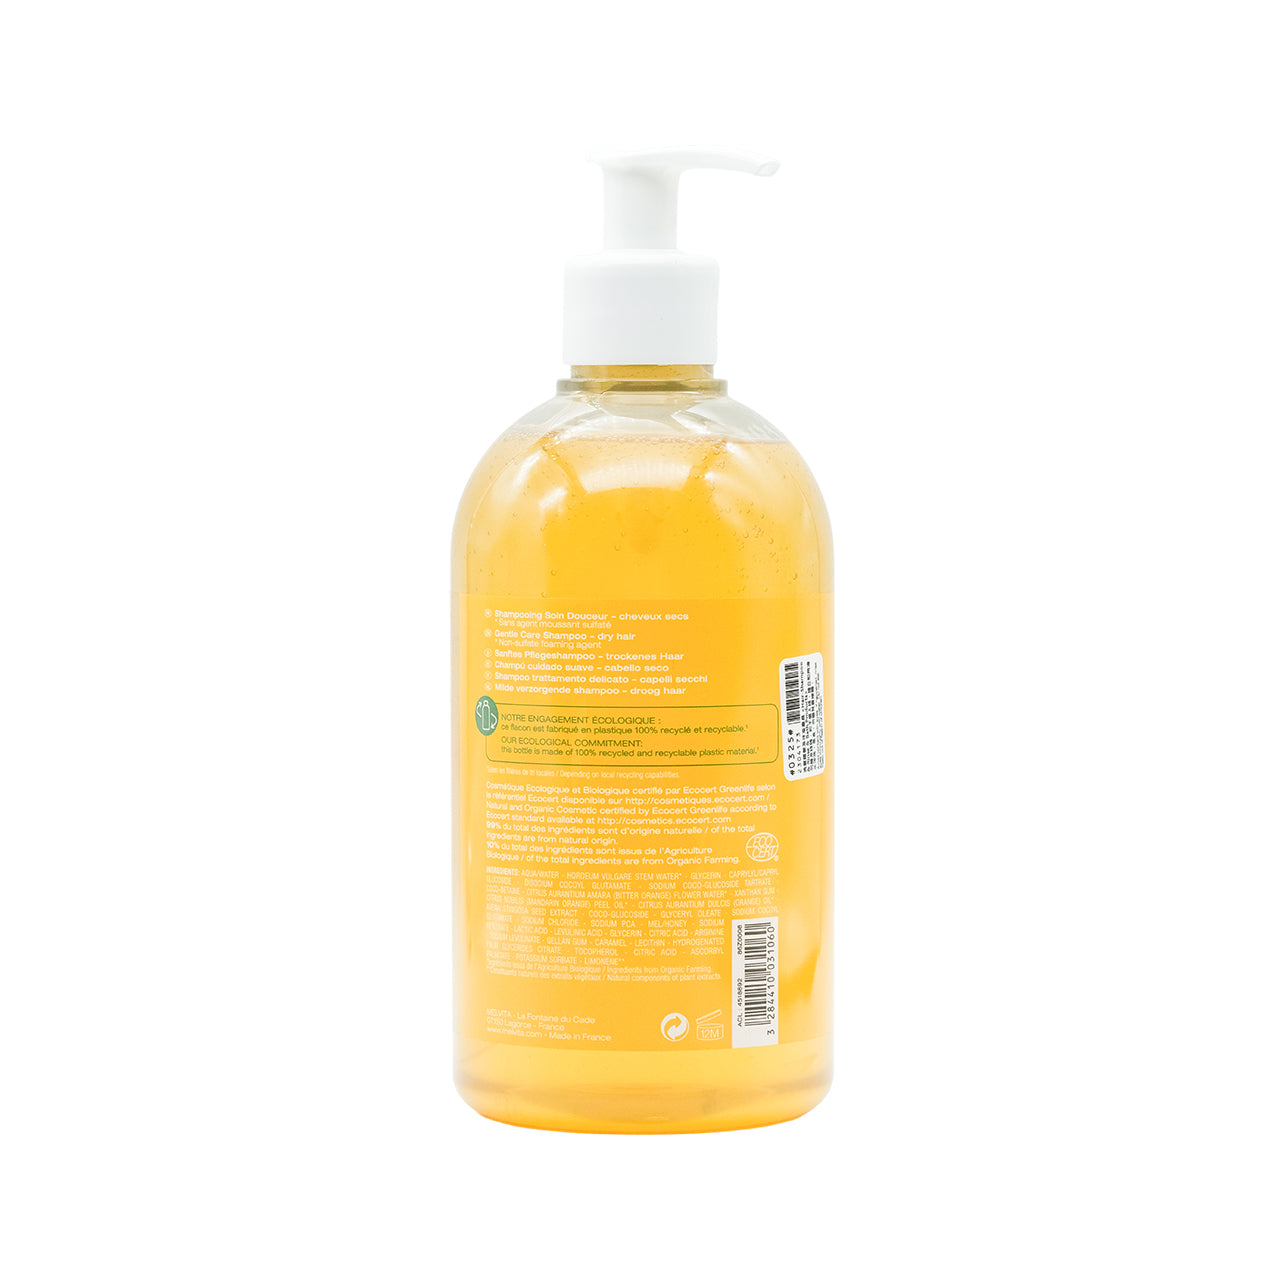 Melvita Gentle Care Shampoo Flower Honey & Orange Blossom 500ml | Sasa Global eShop